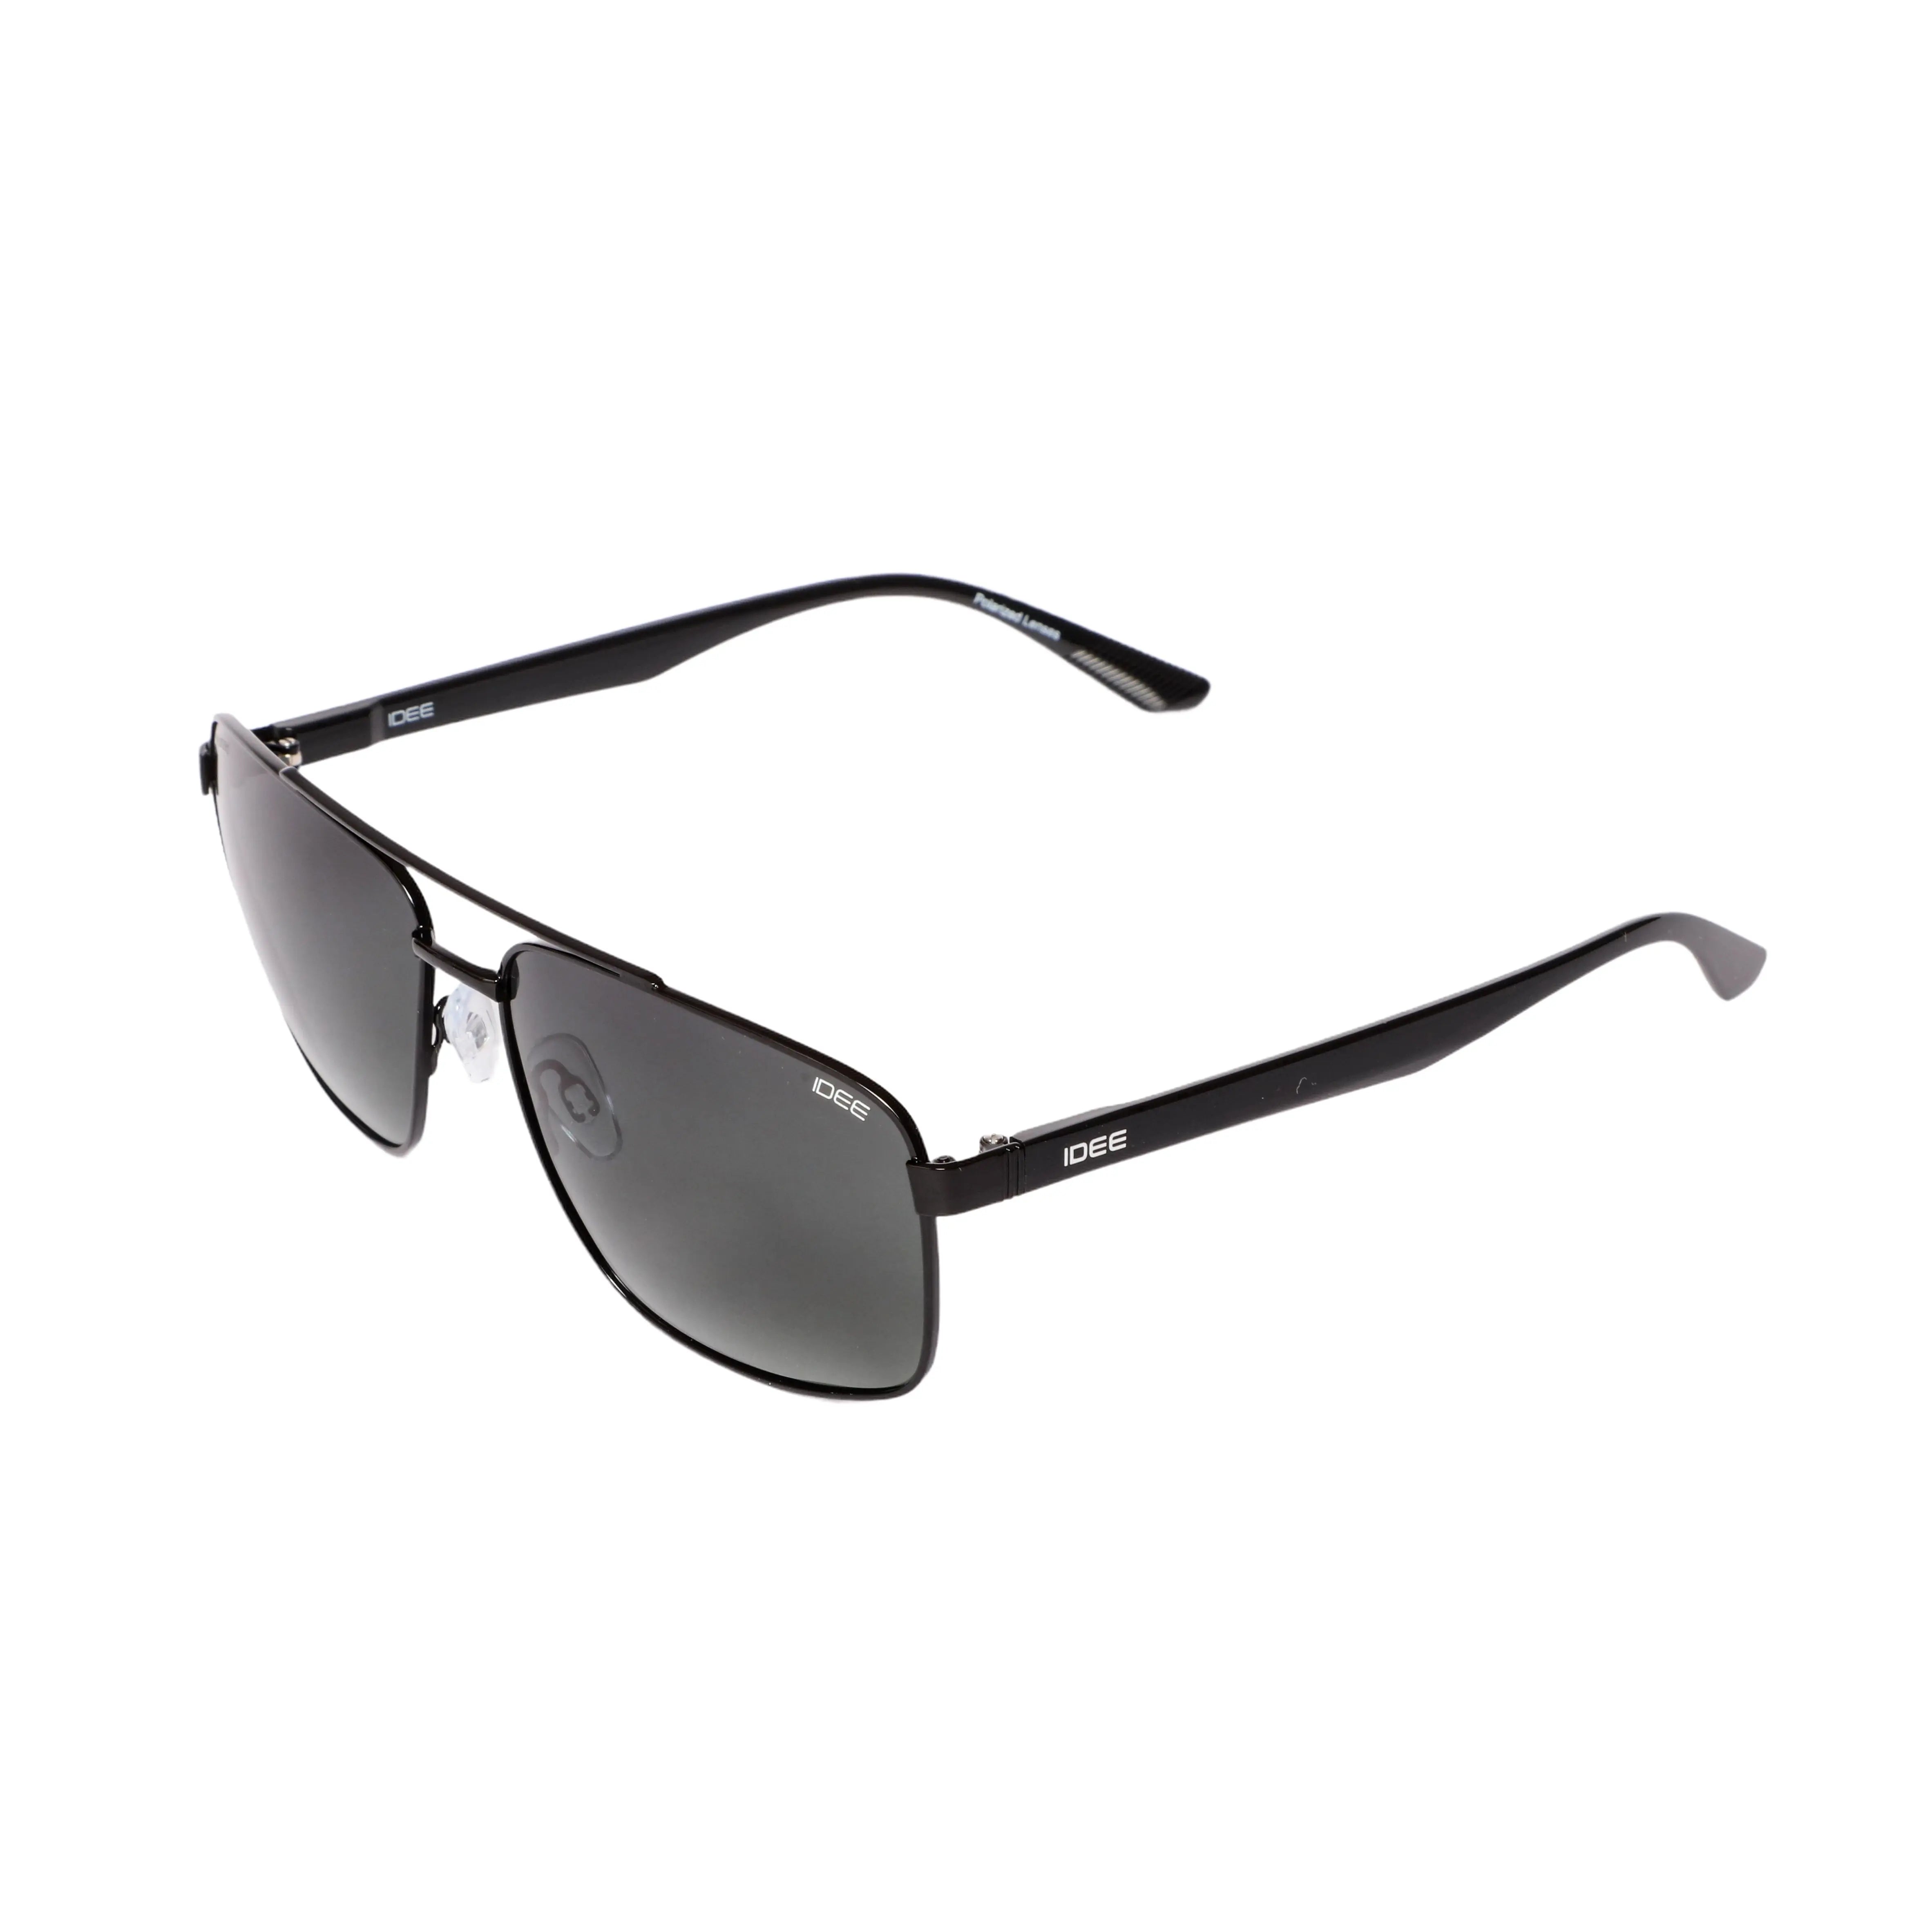 IDEE-S3001--C1 Sunglasses - Premium Sunglasses from IDEE - Just Rs. 3980! Shop now at Laxmi Opticians